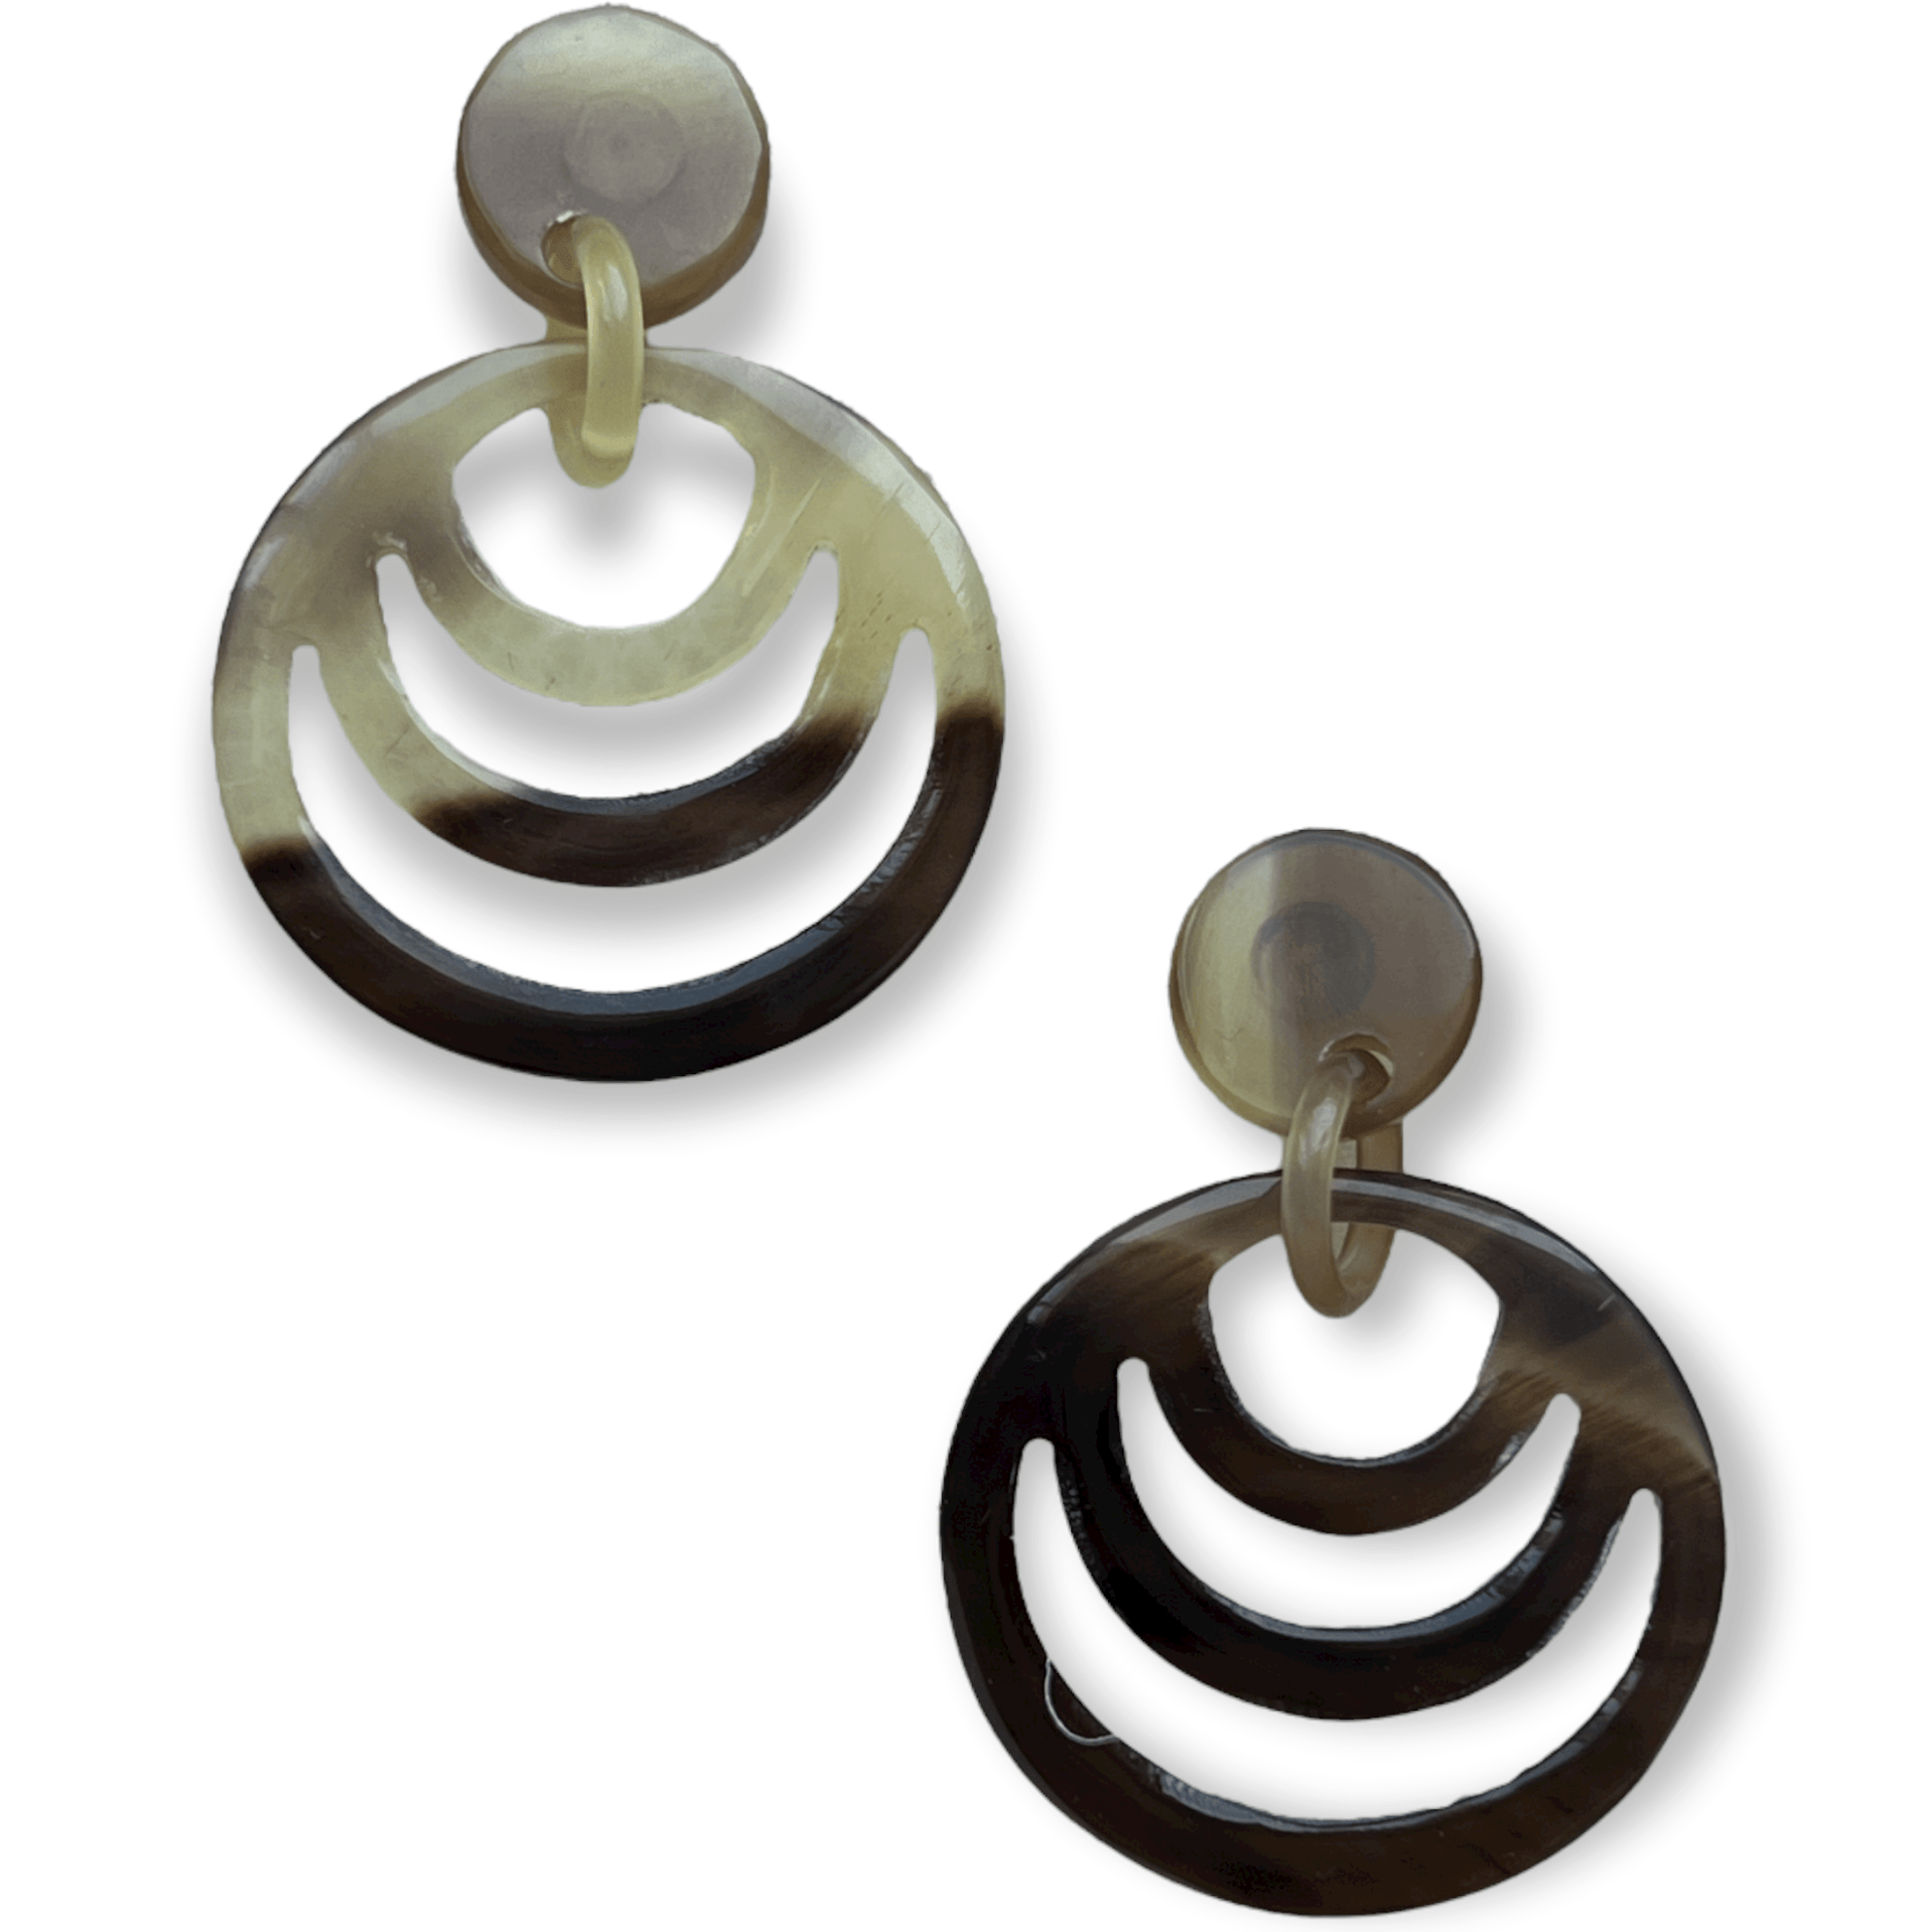 Round multi-ring drop earrings in rich earth tones - Sundara Joon